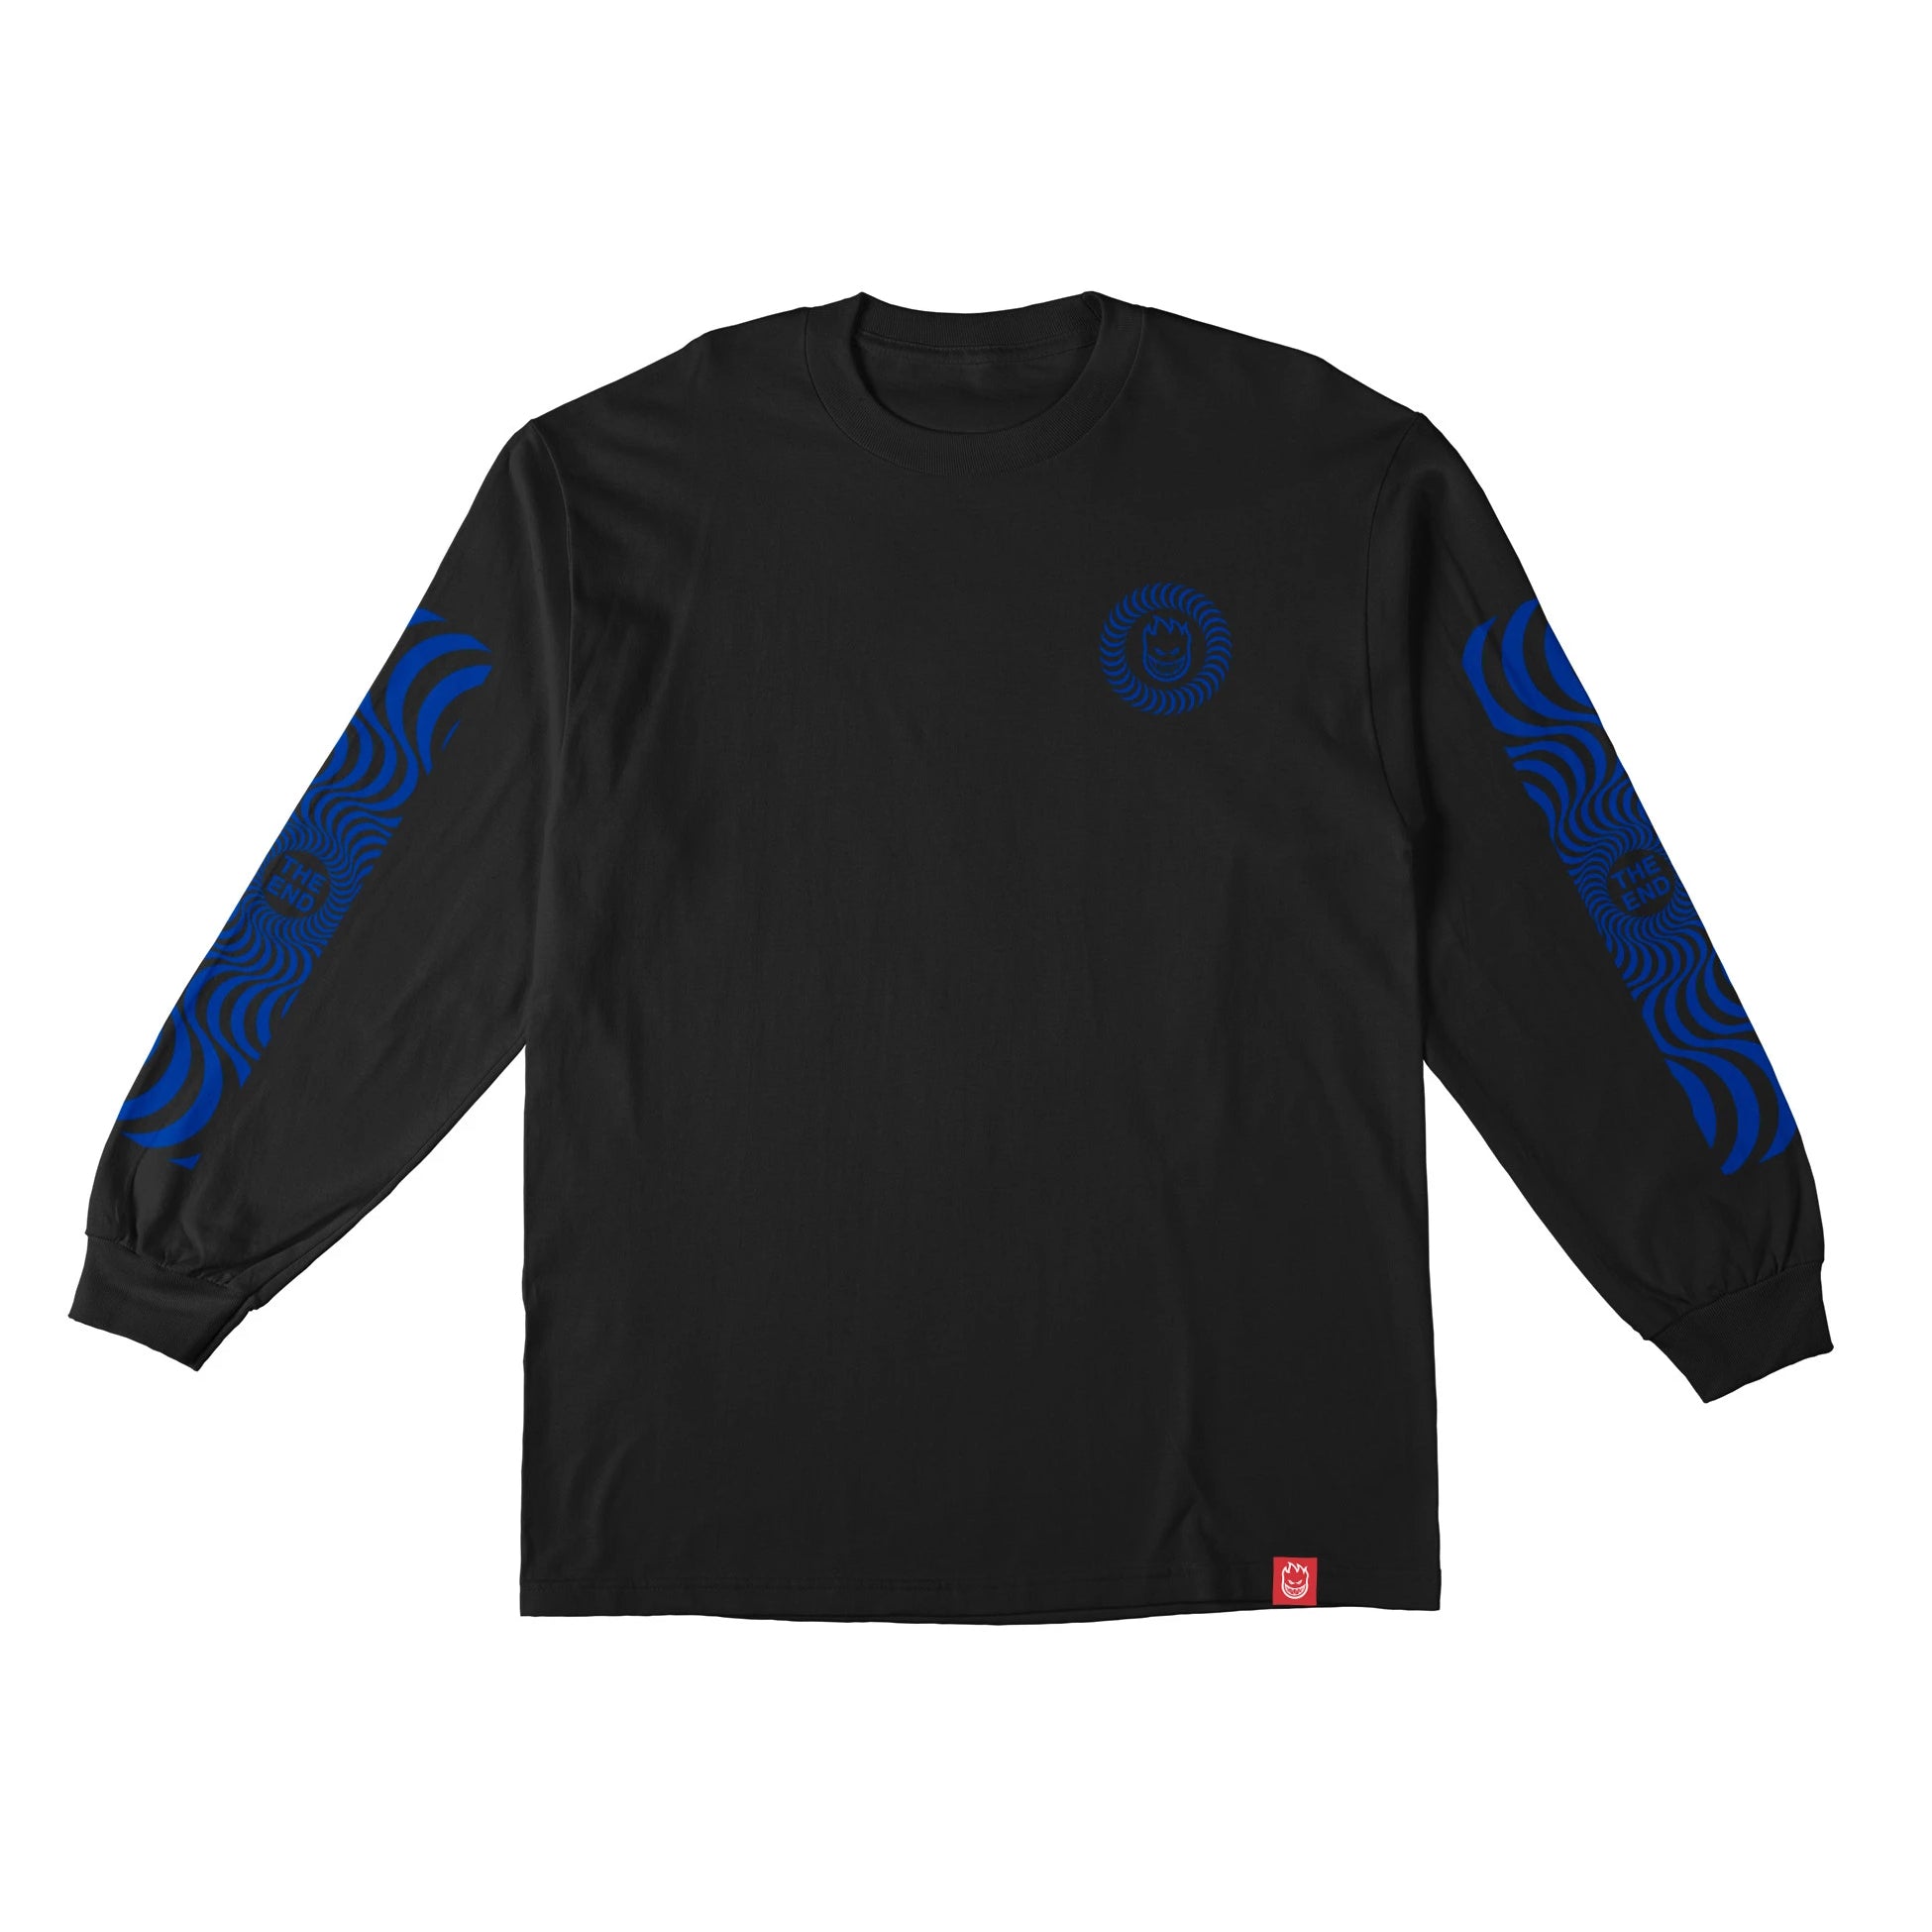 Black/Blue Classic Swirl Spitfire Long Sleeve T-Shirt